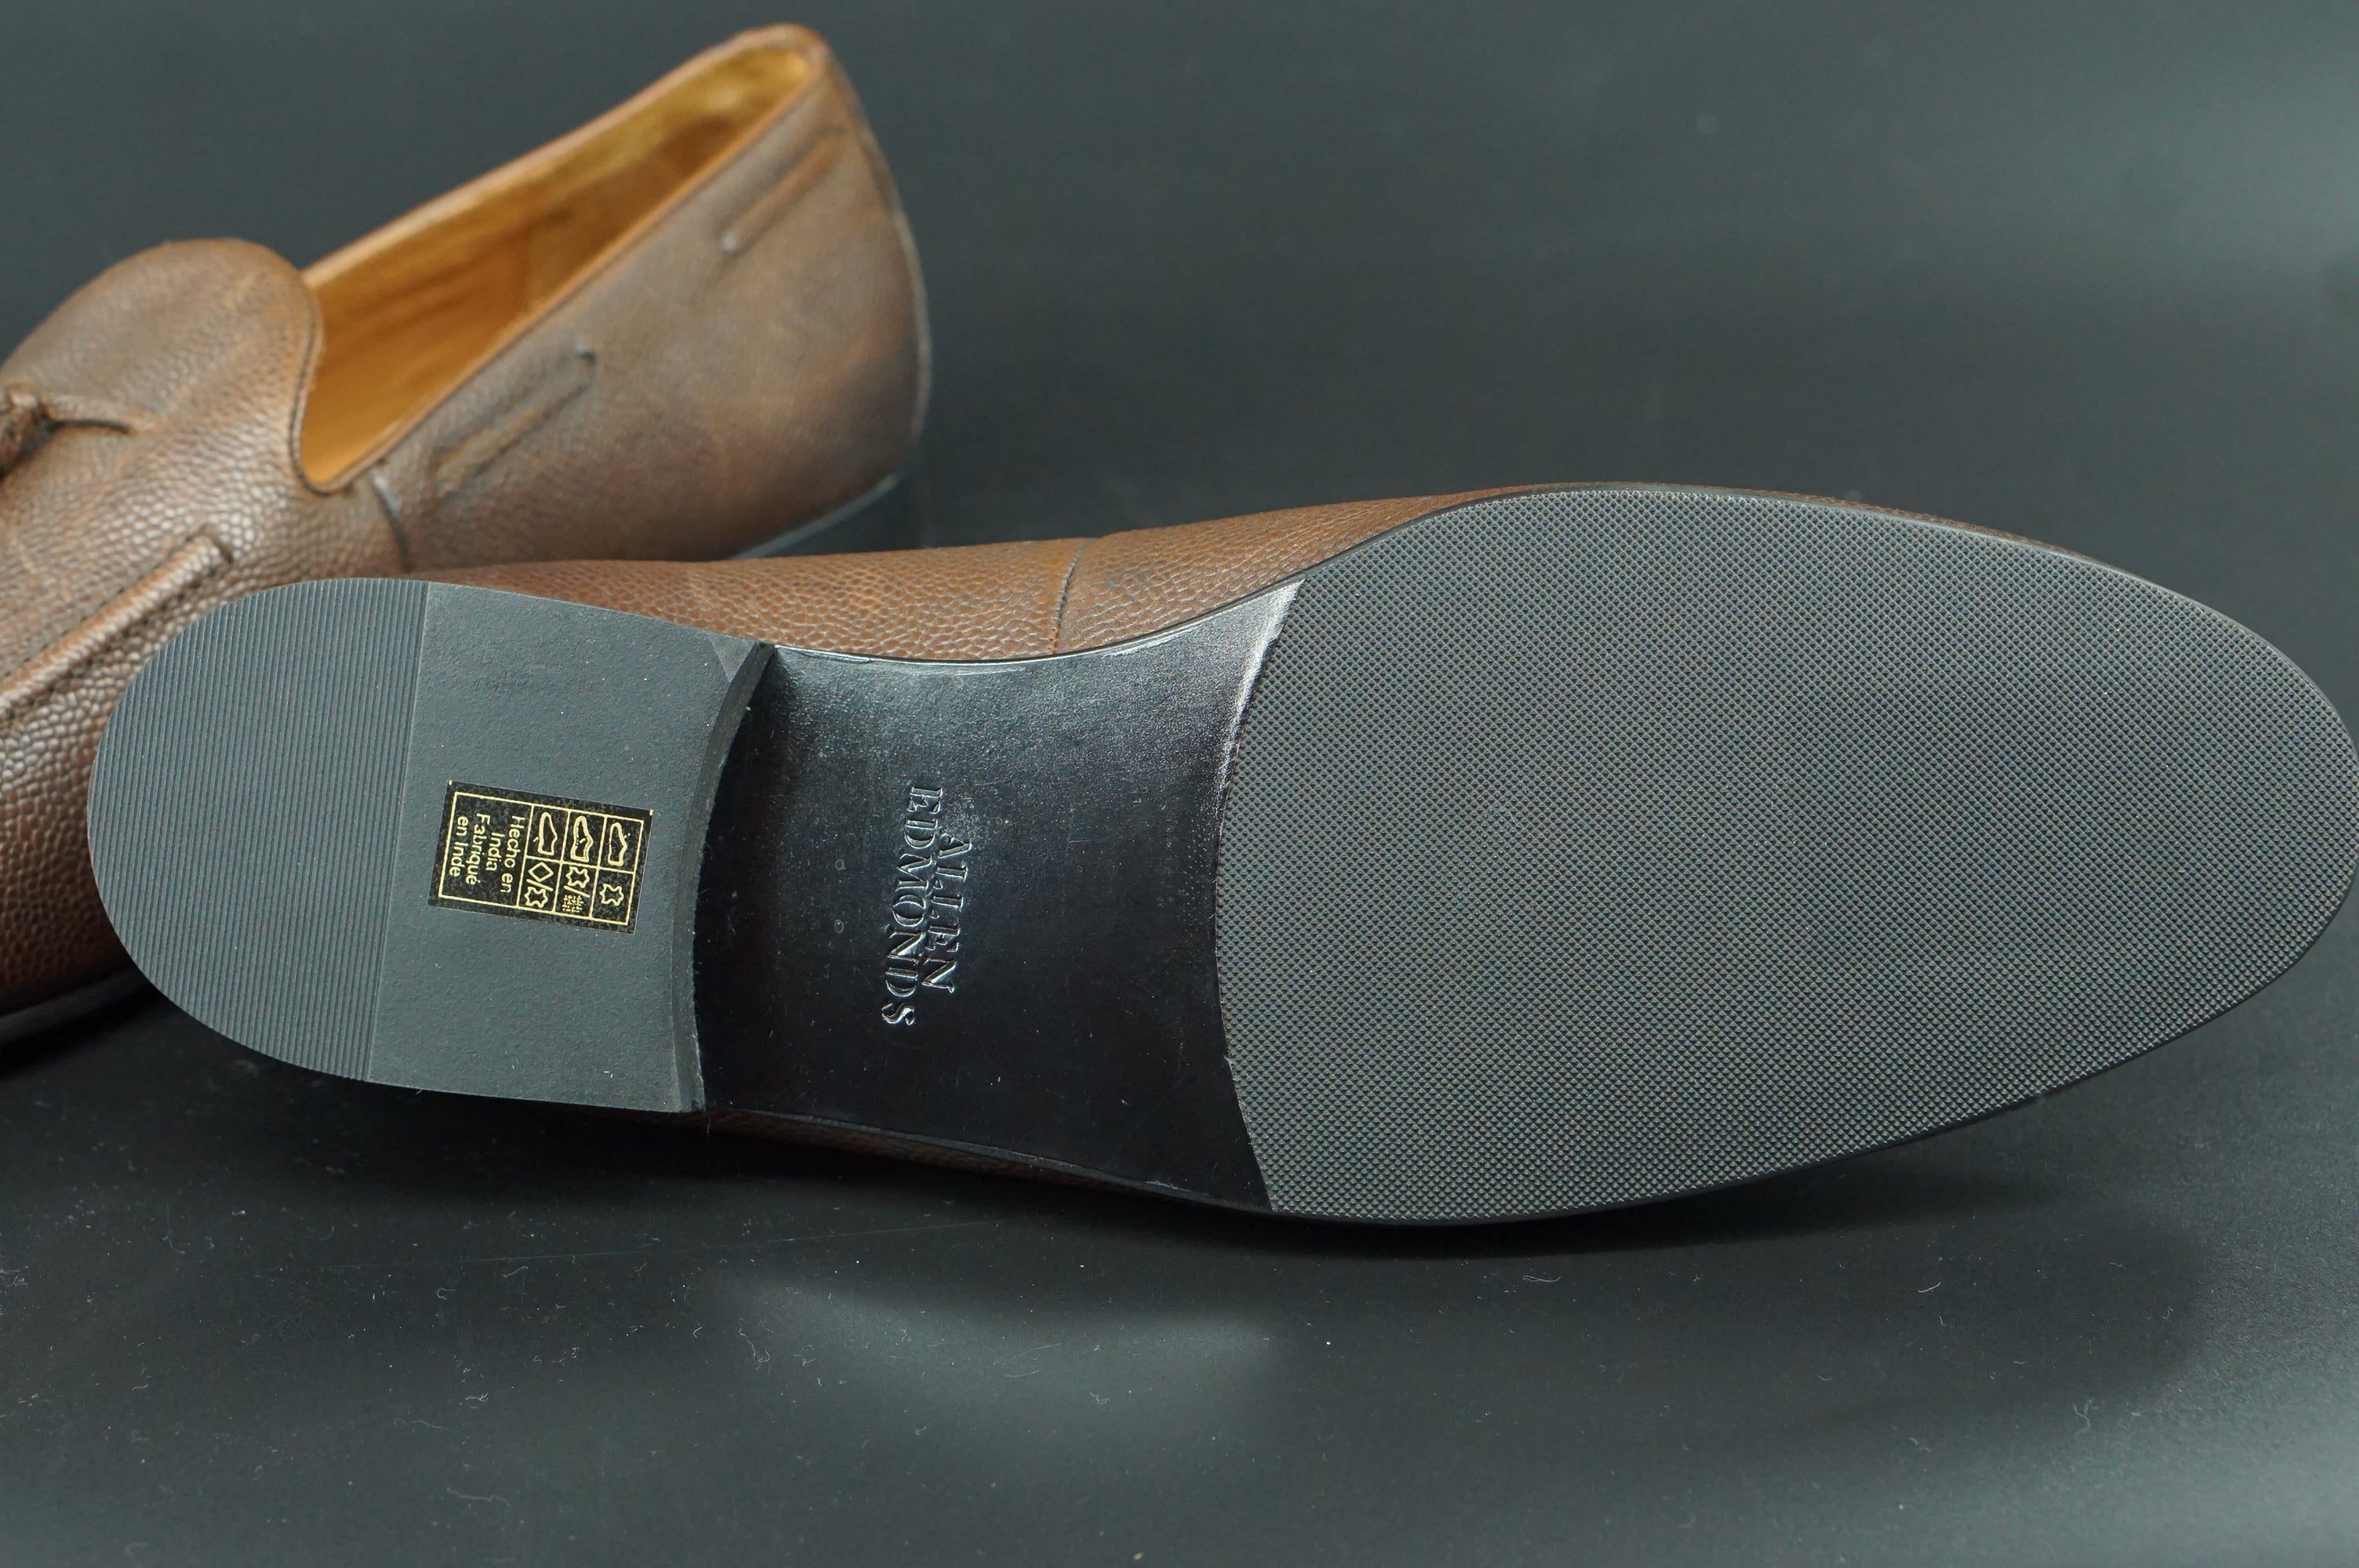 Allen Edmonds Presley Tassel Brown Loafer Dress Shoe Size 13 New $395 Pebbled